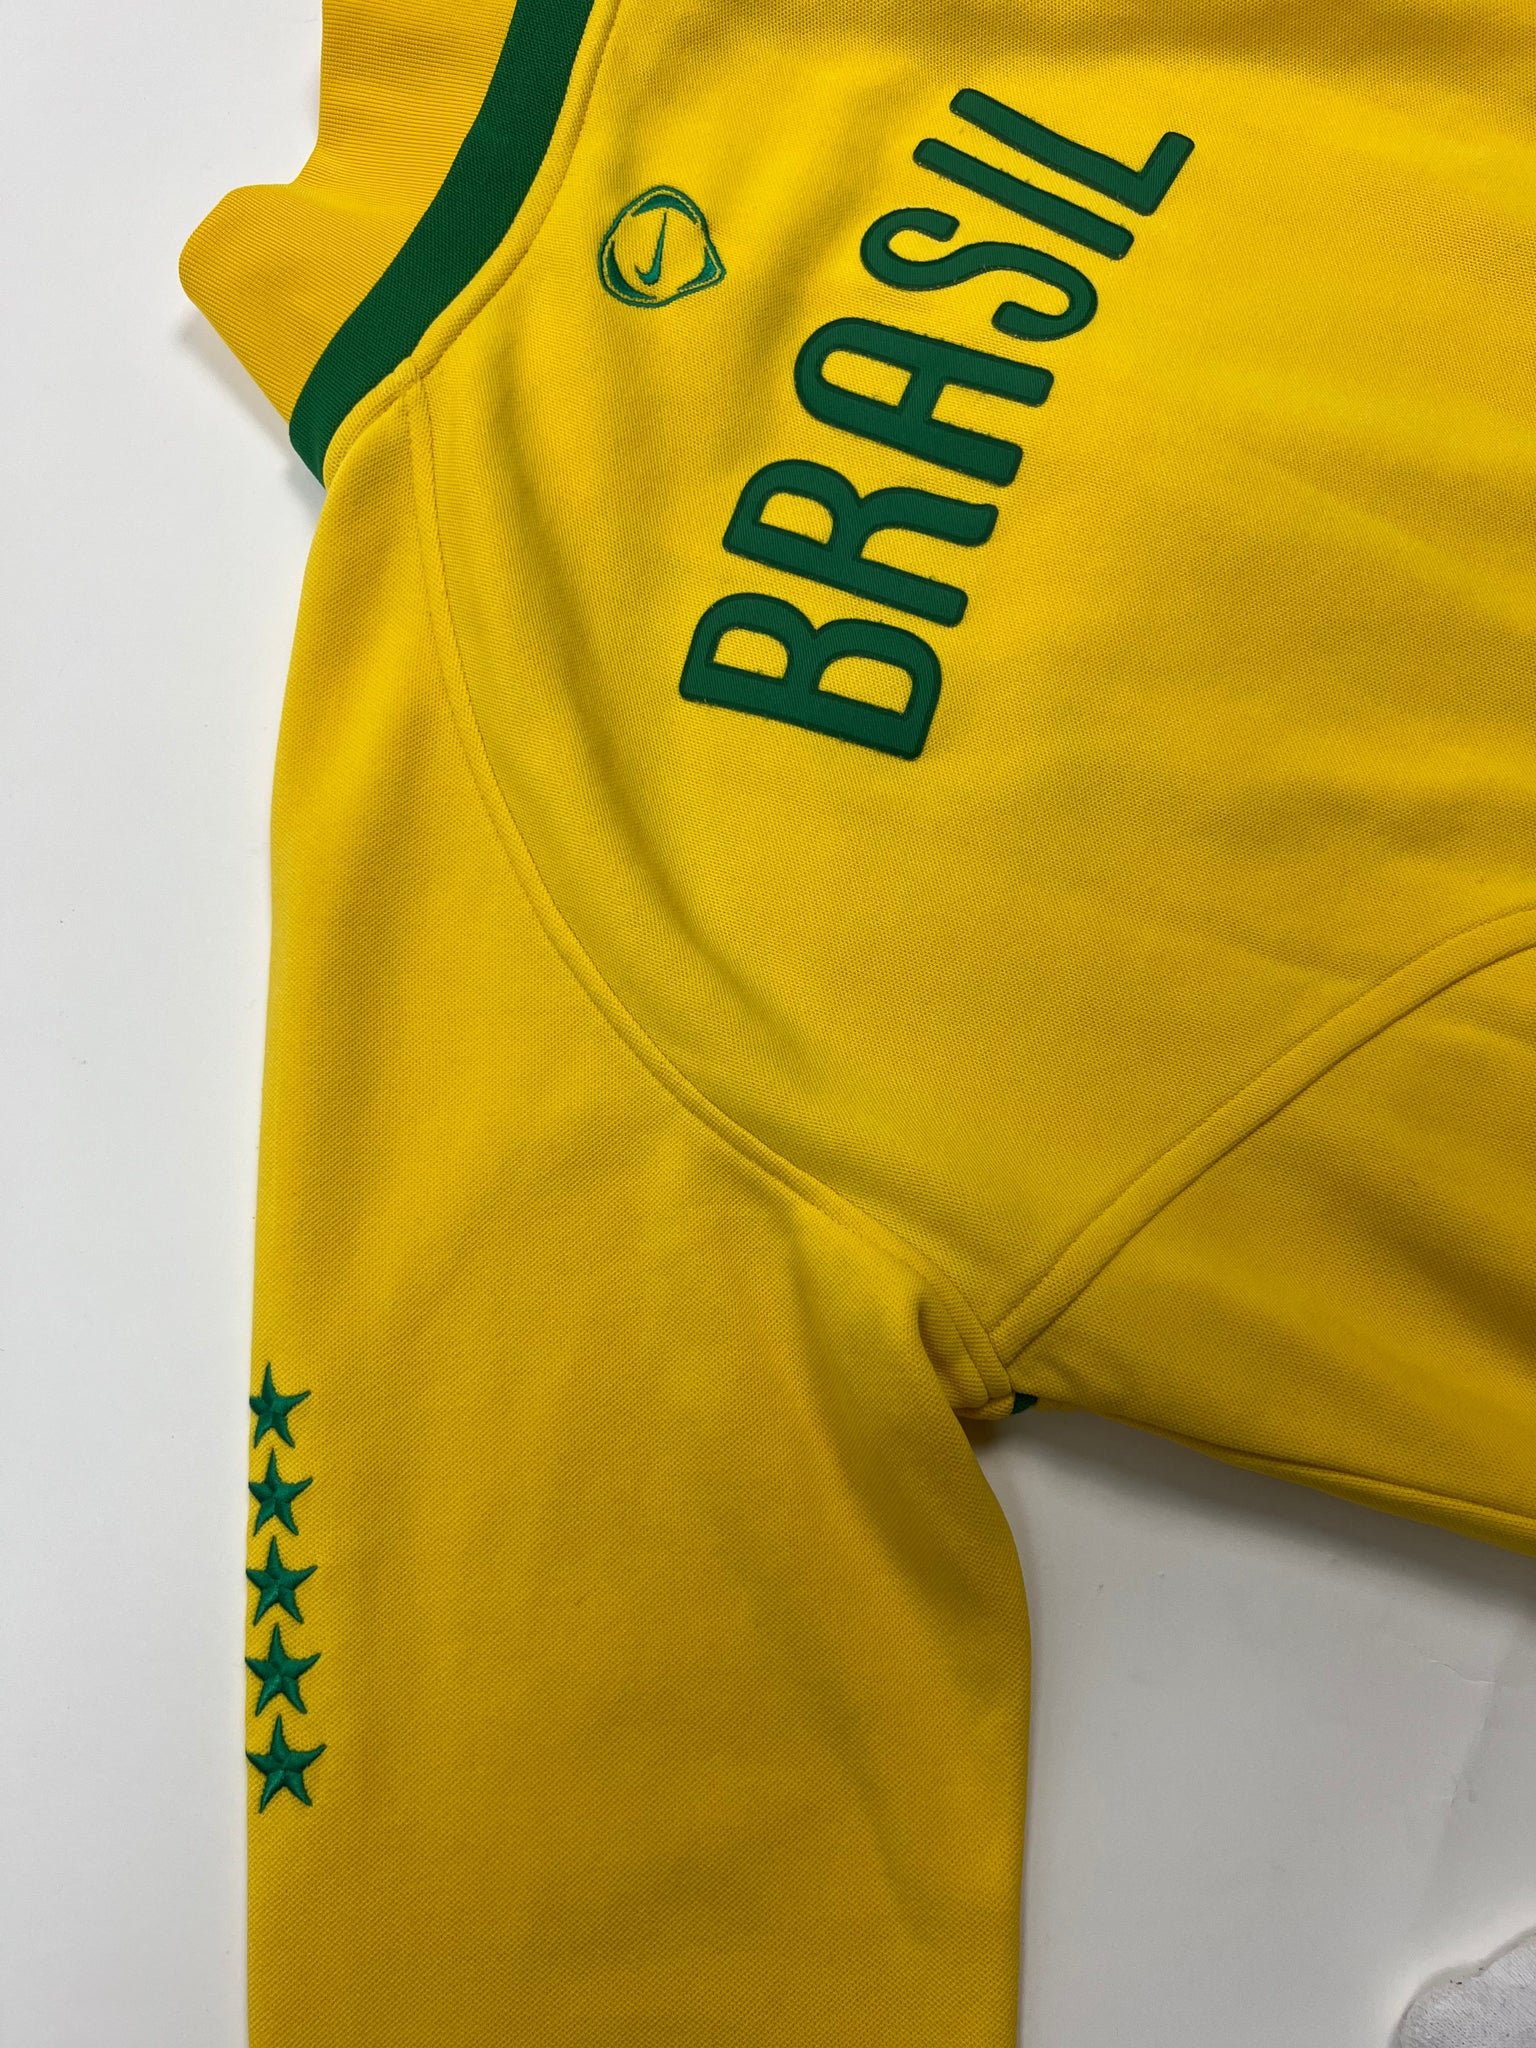 Nike Brazil Track Jacket (L)